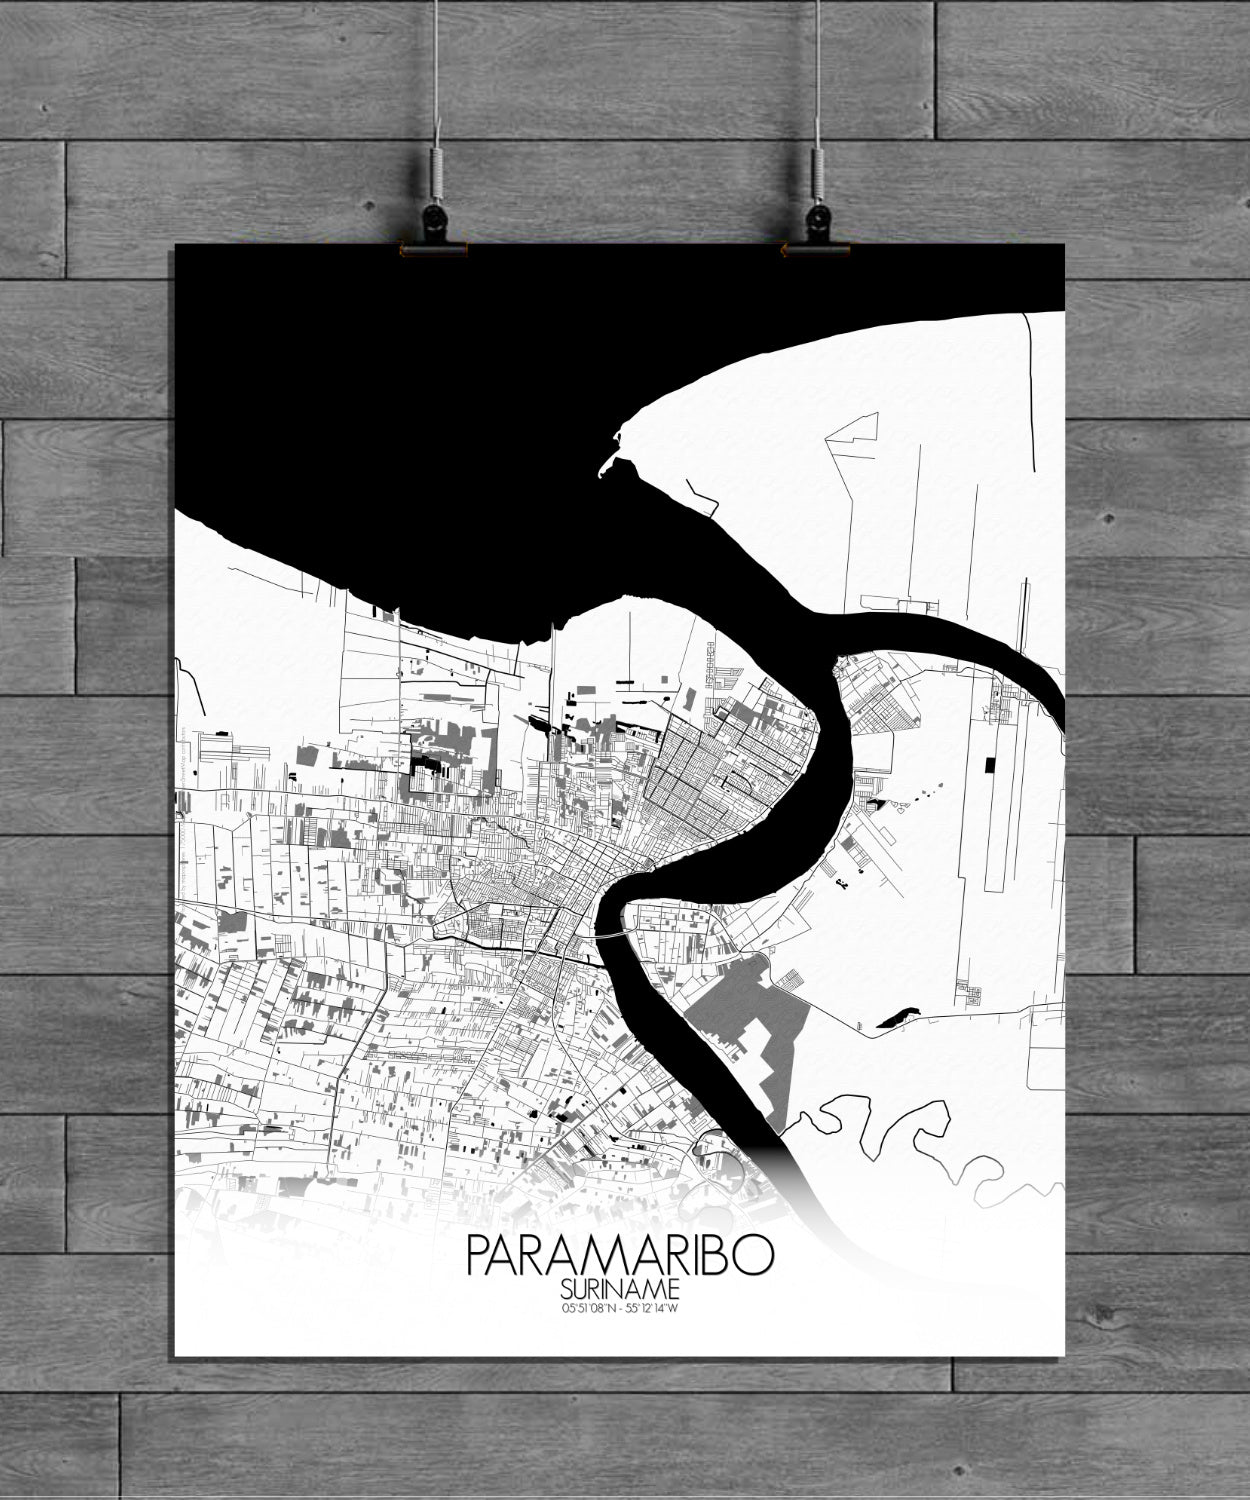 Paramaribo Black and White round shape design poster city map